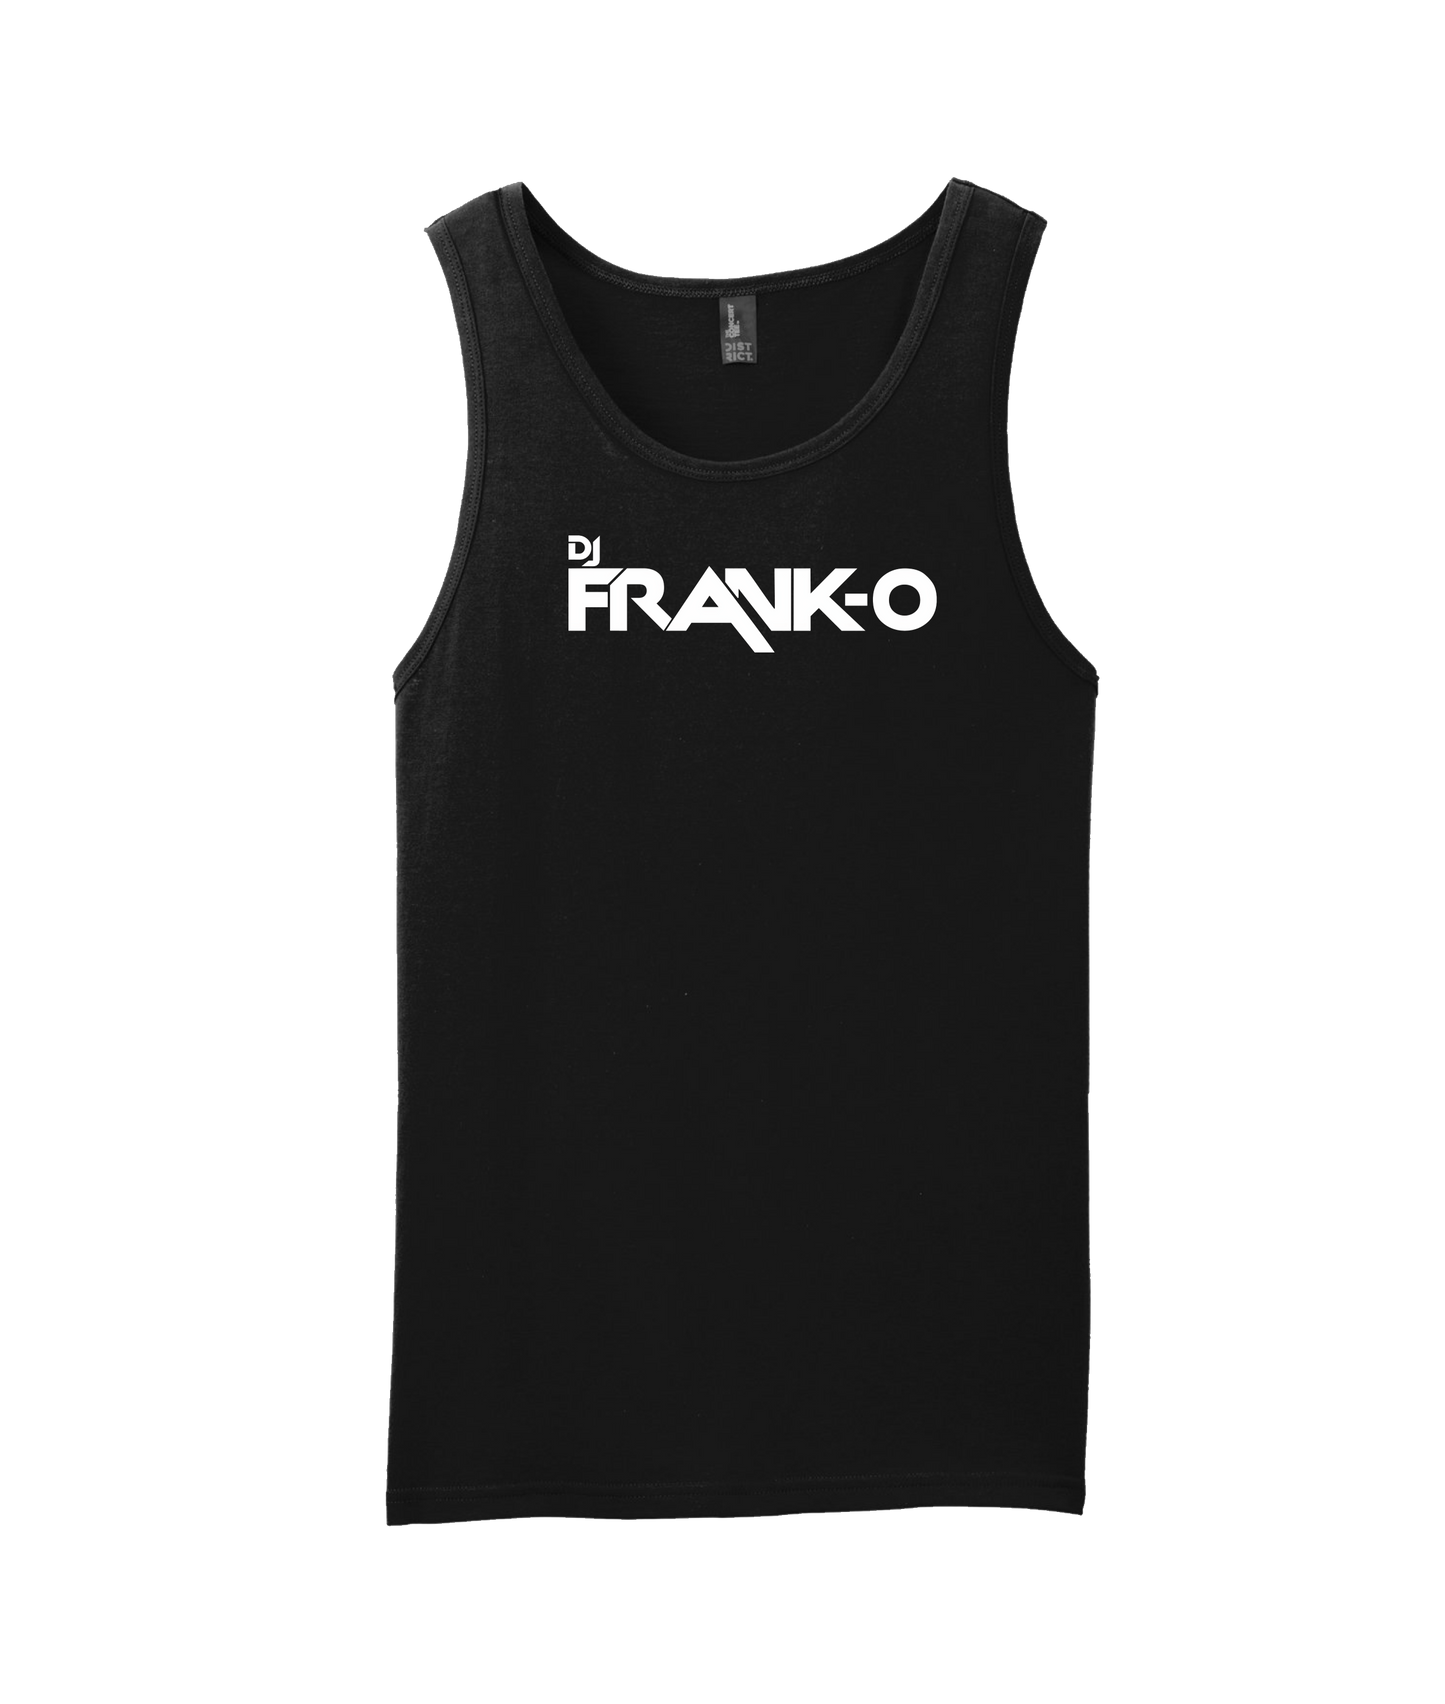 DJ FRANK - O - Logo - Black Tank Top